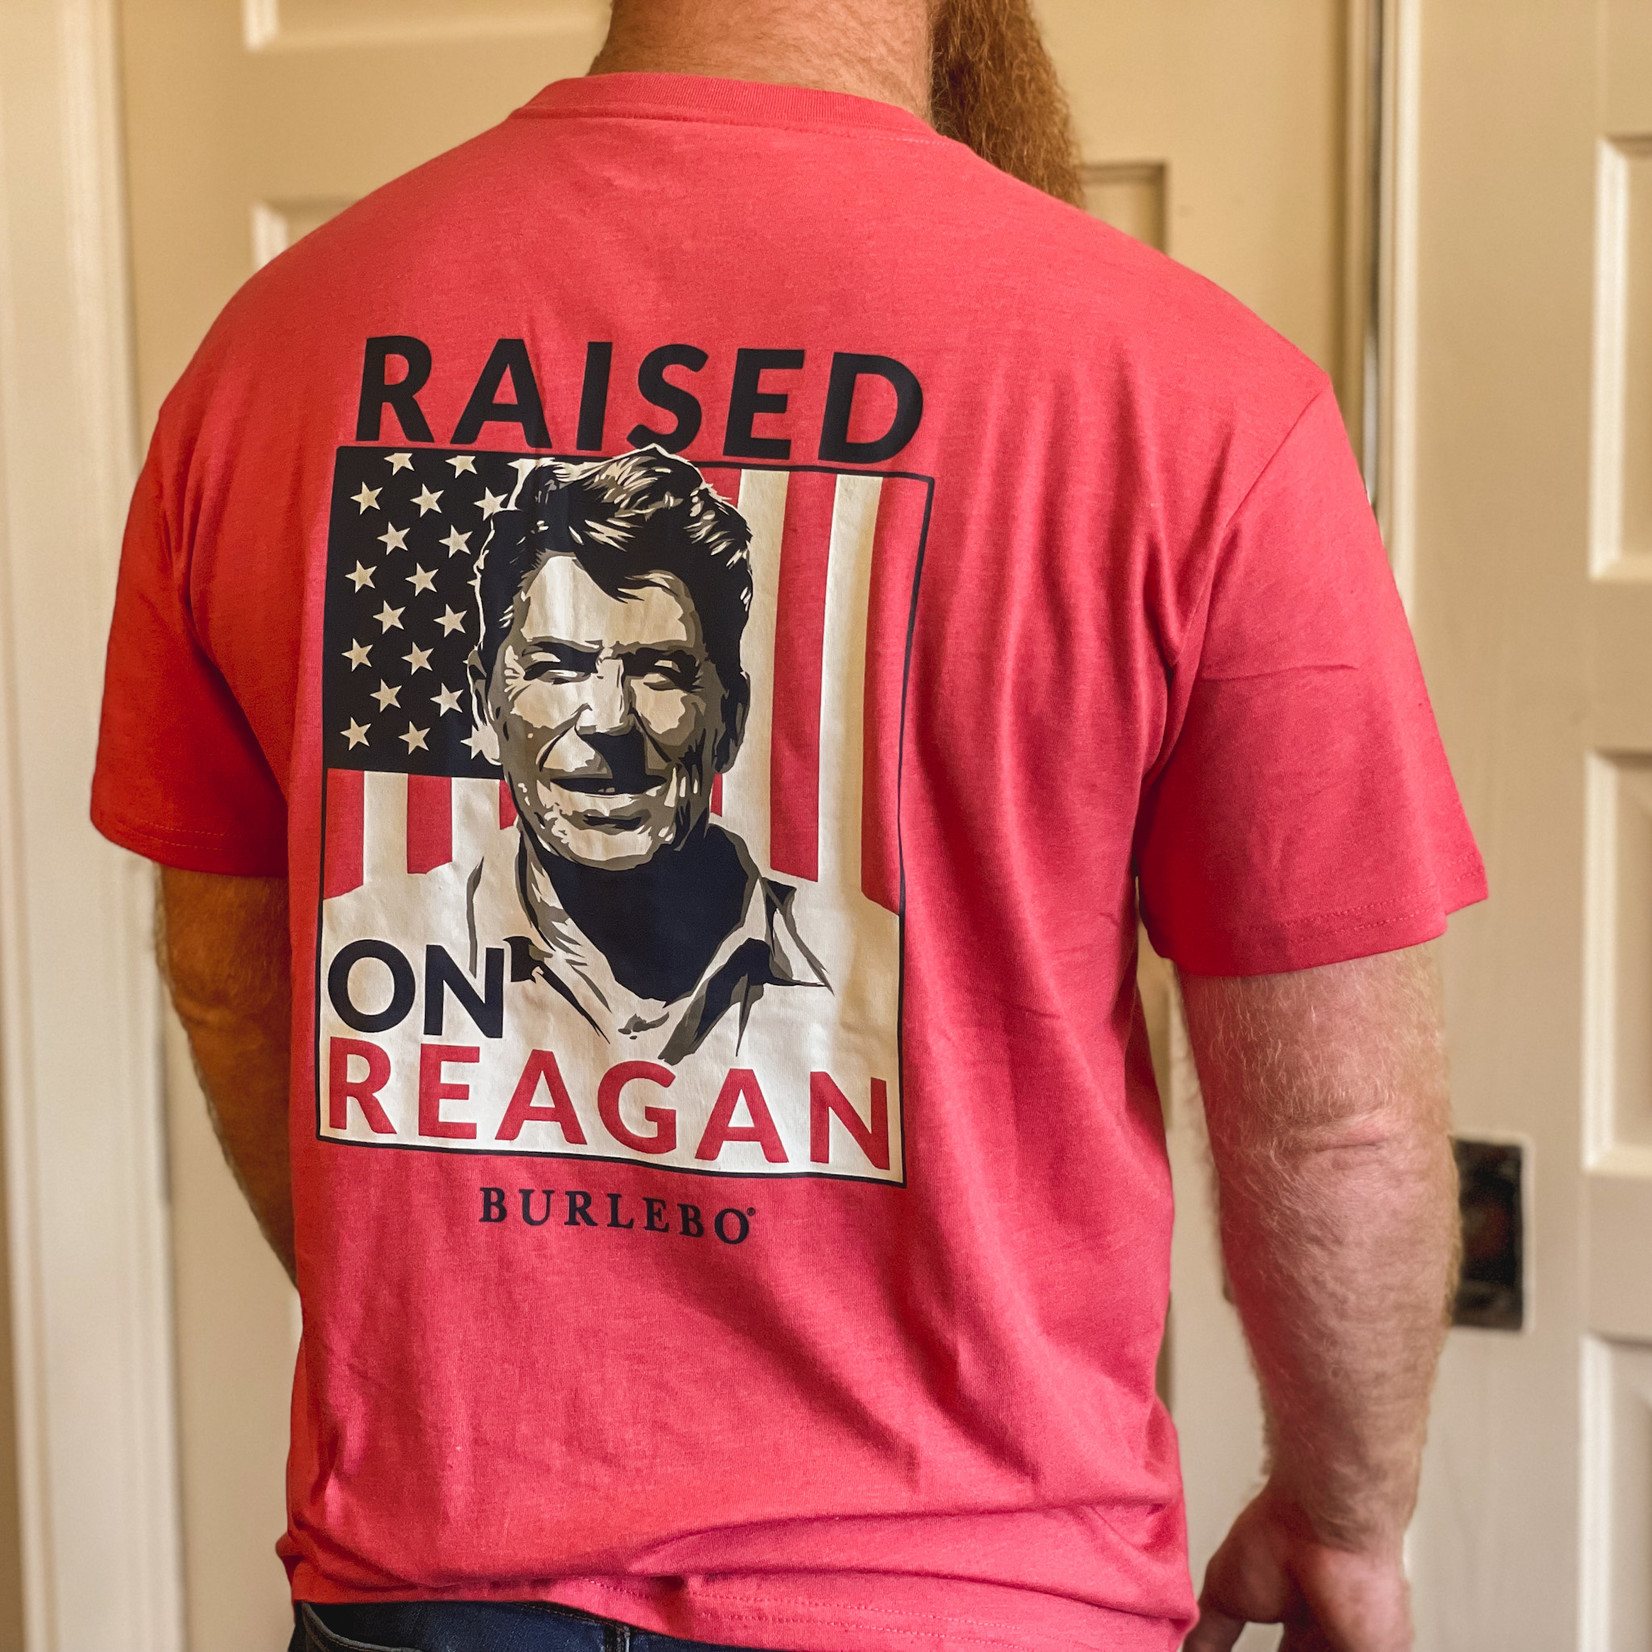 Burlebo Raised on Reagan T-shirt